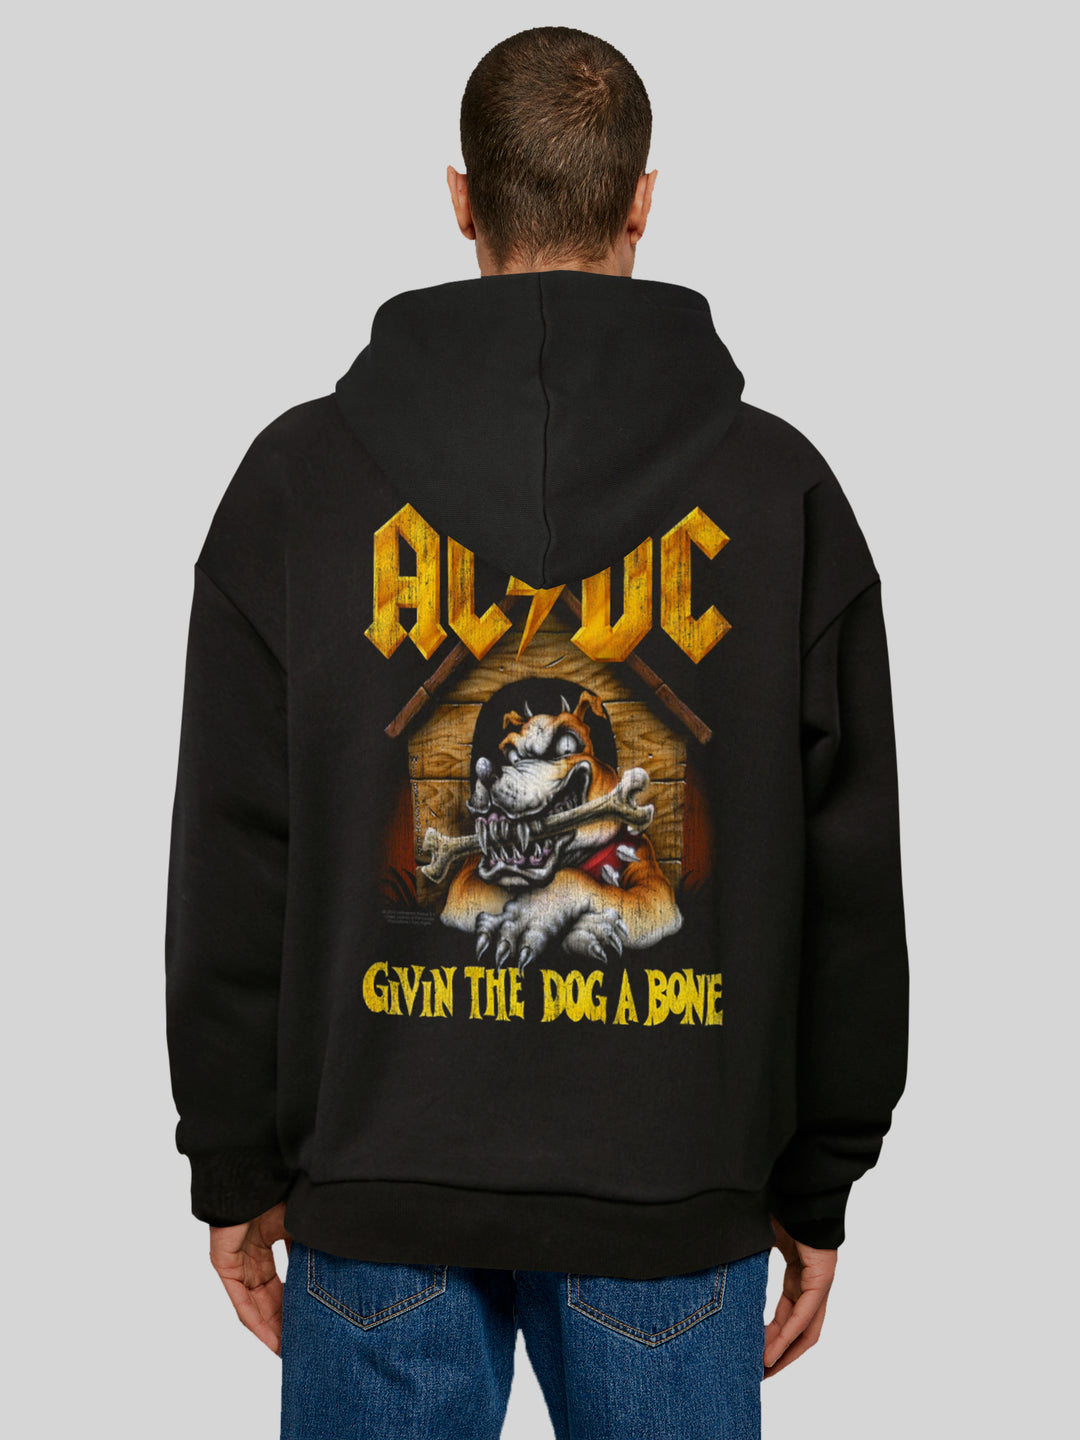 ACDC Hoodie | Givin The Dog A Bone  | Premium Oversize Hoody